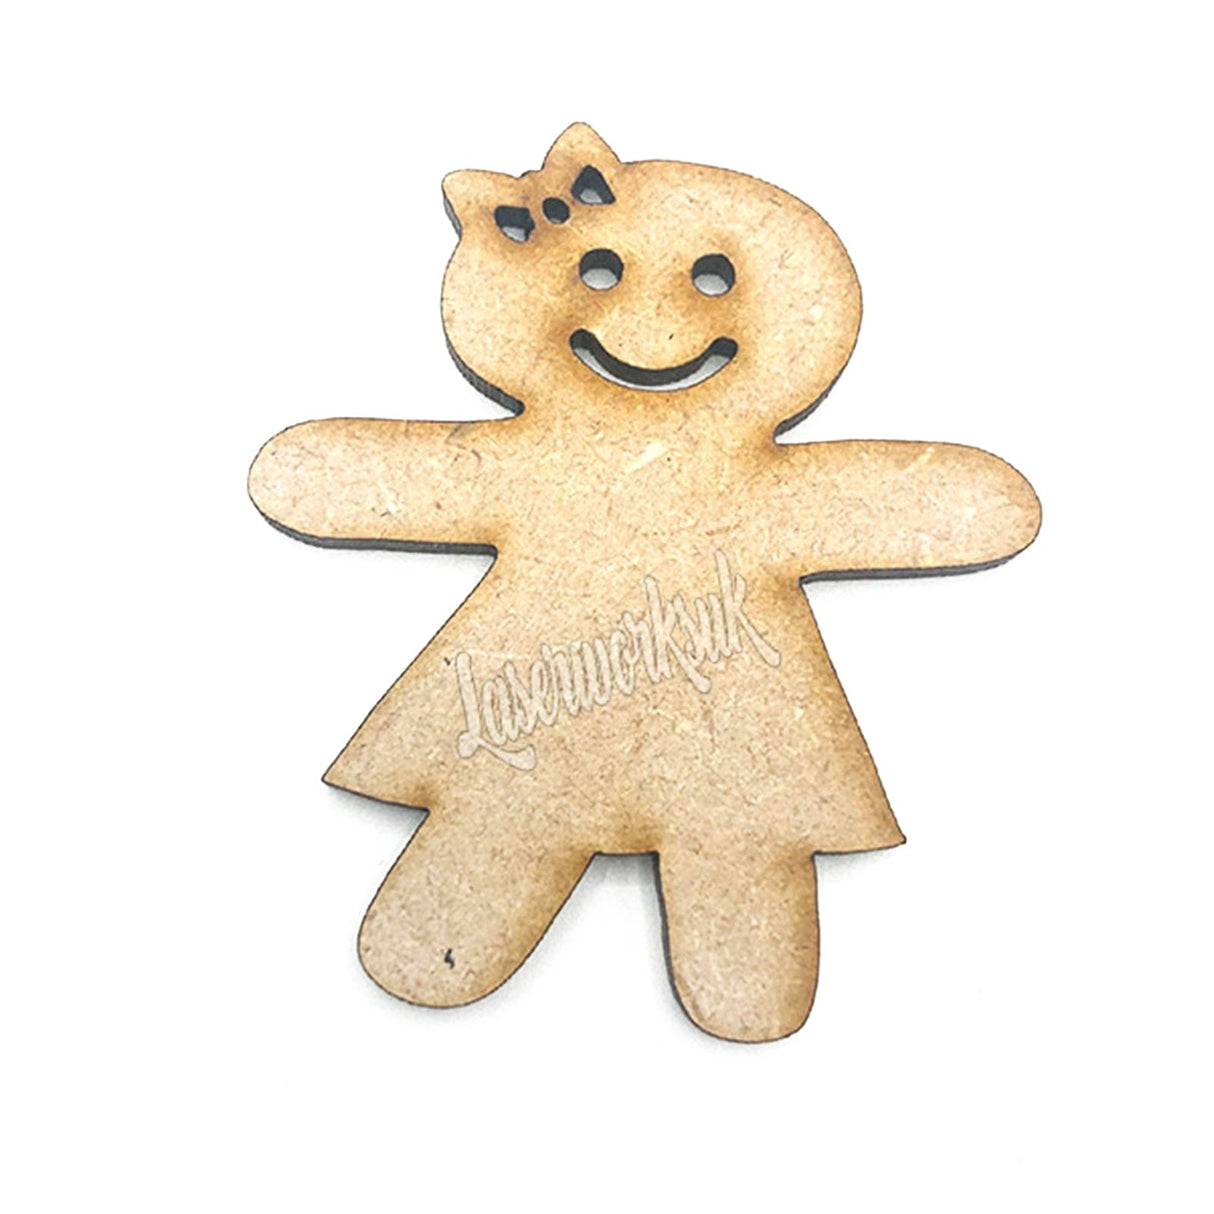 Wooden Gingerbread Man - Craft Shapes - Laserworksuk